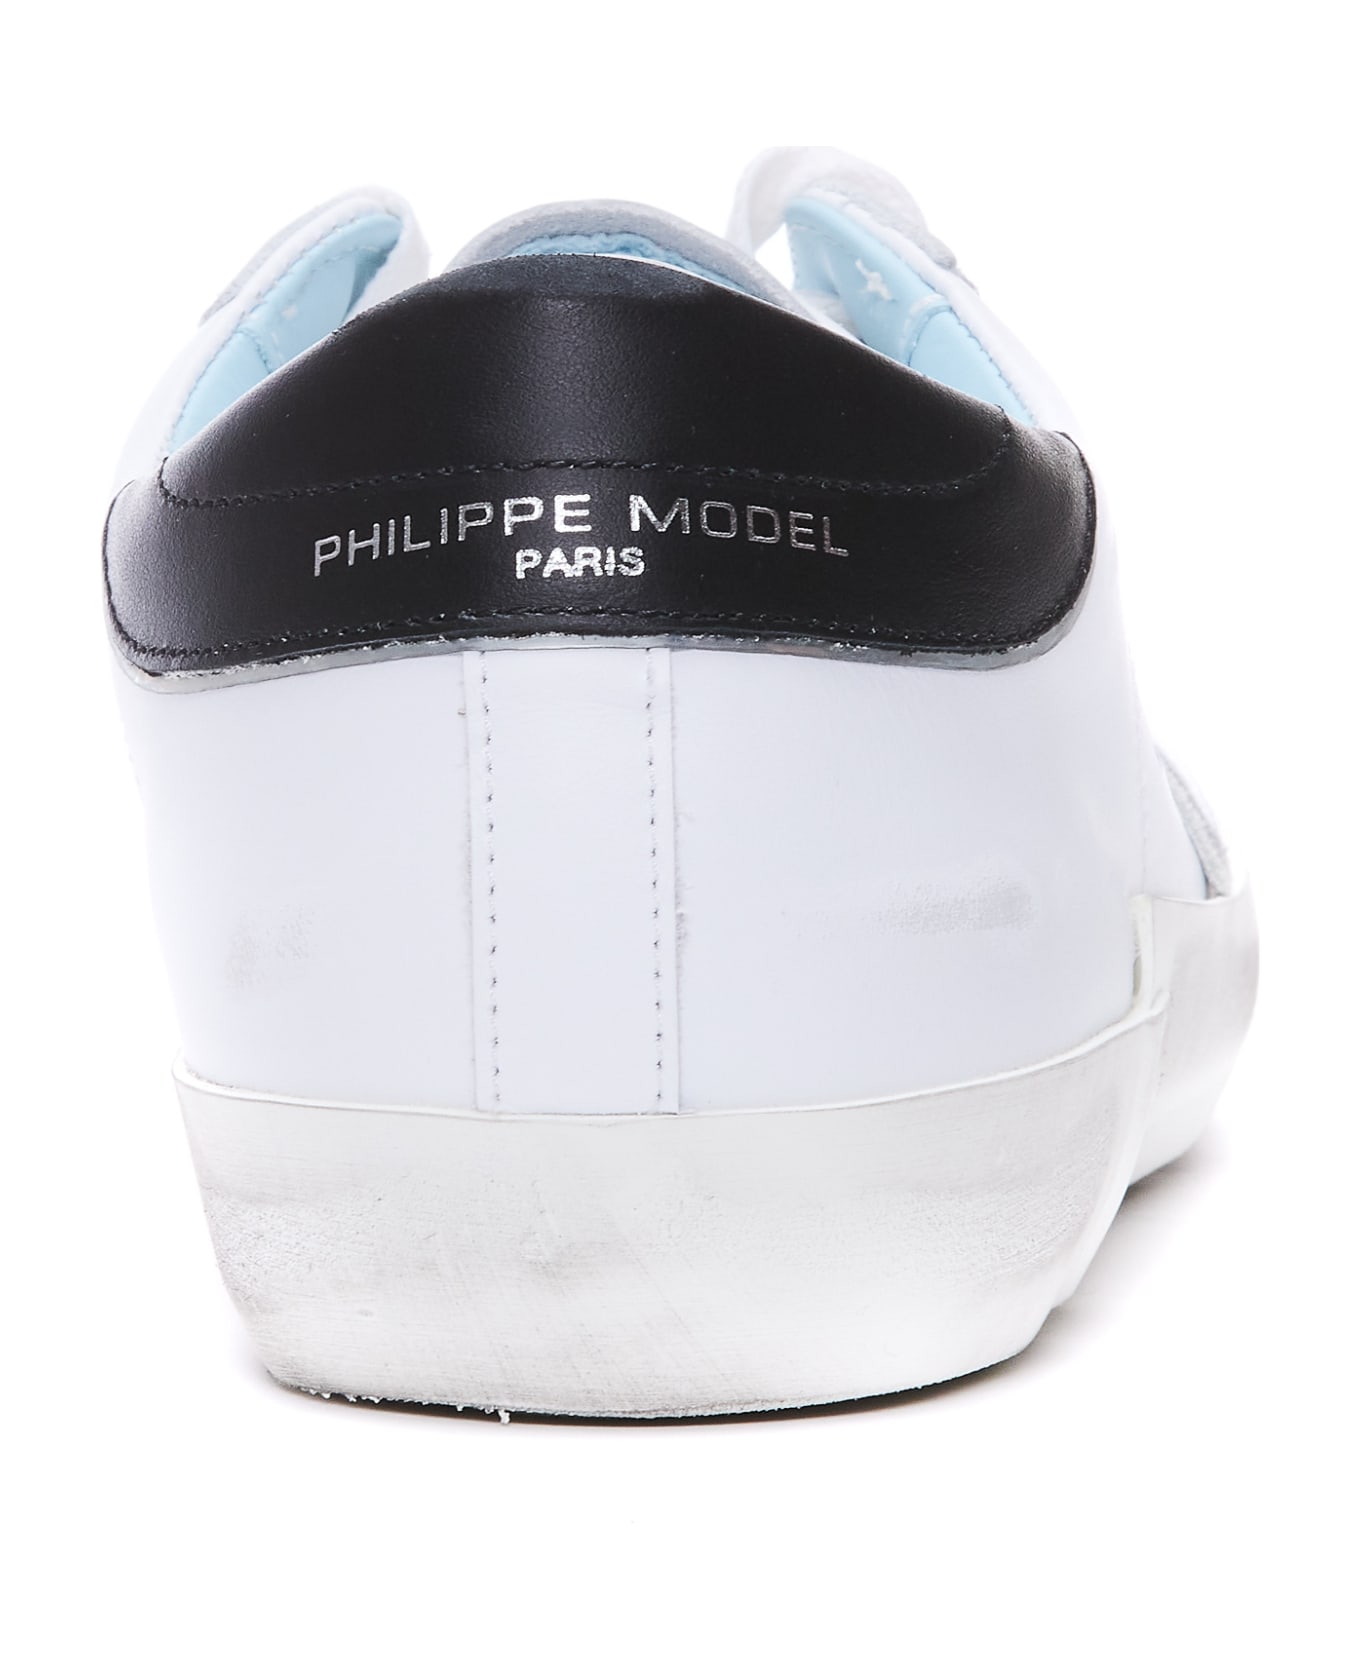 Philippe Model Prsx Sneakers - Bianco/nero スニーカー